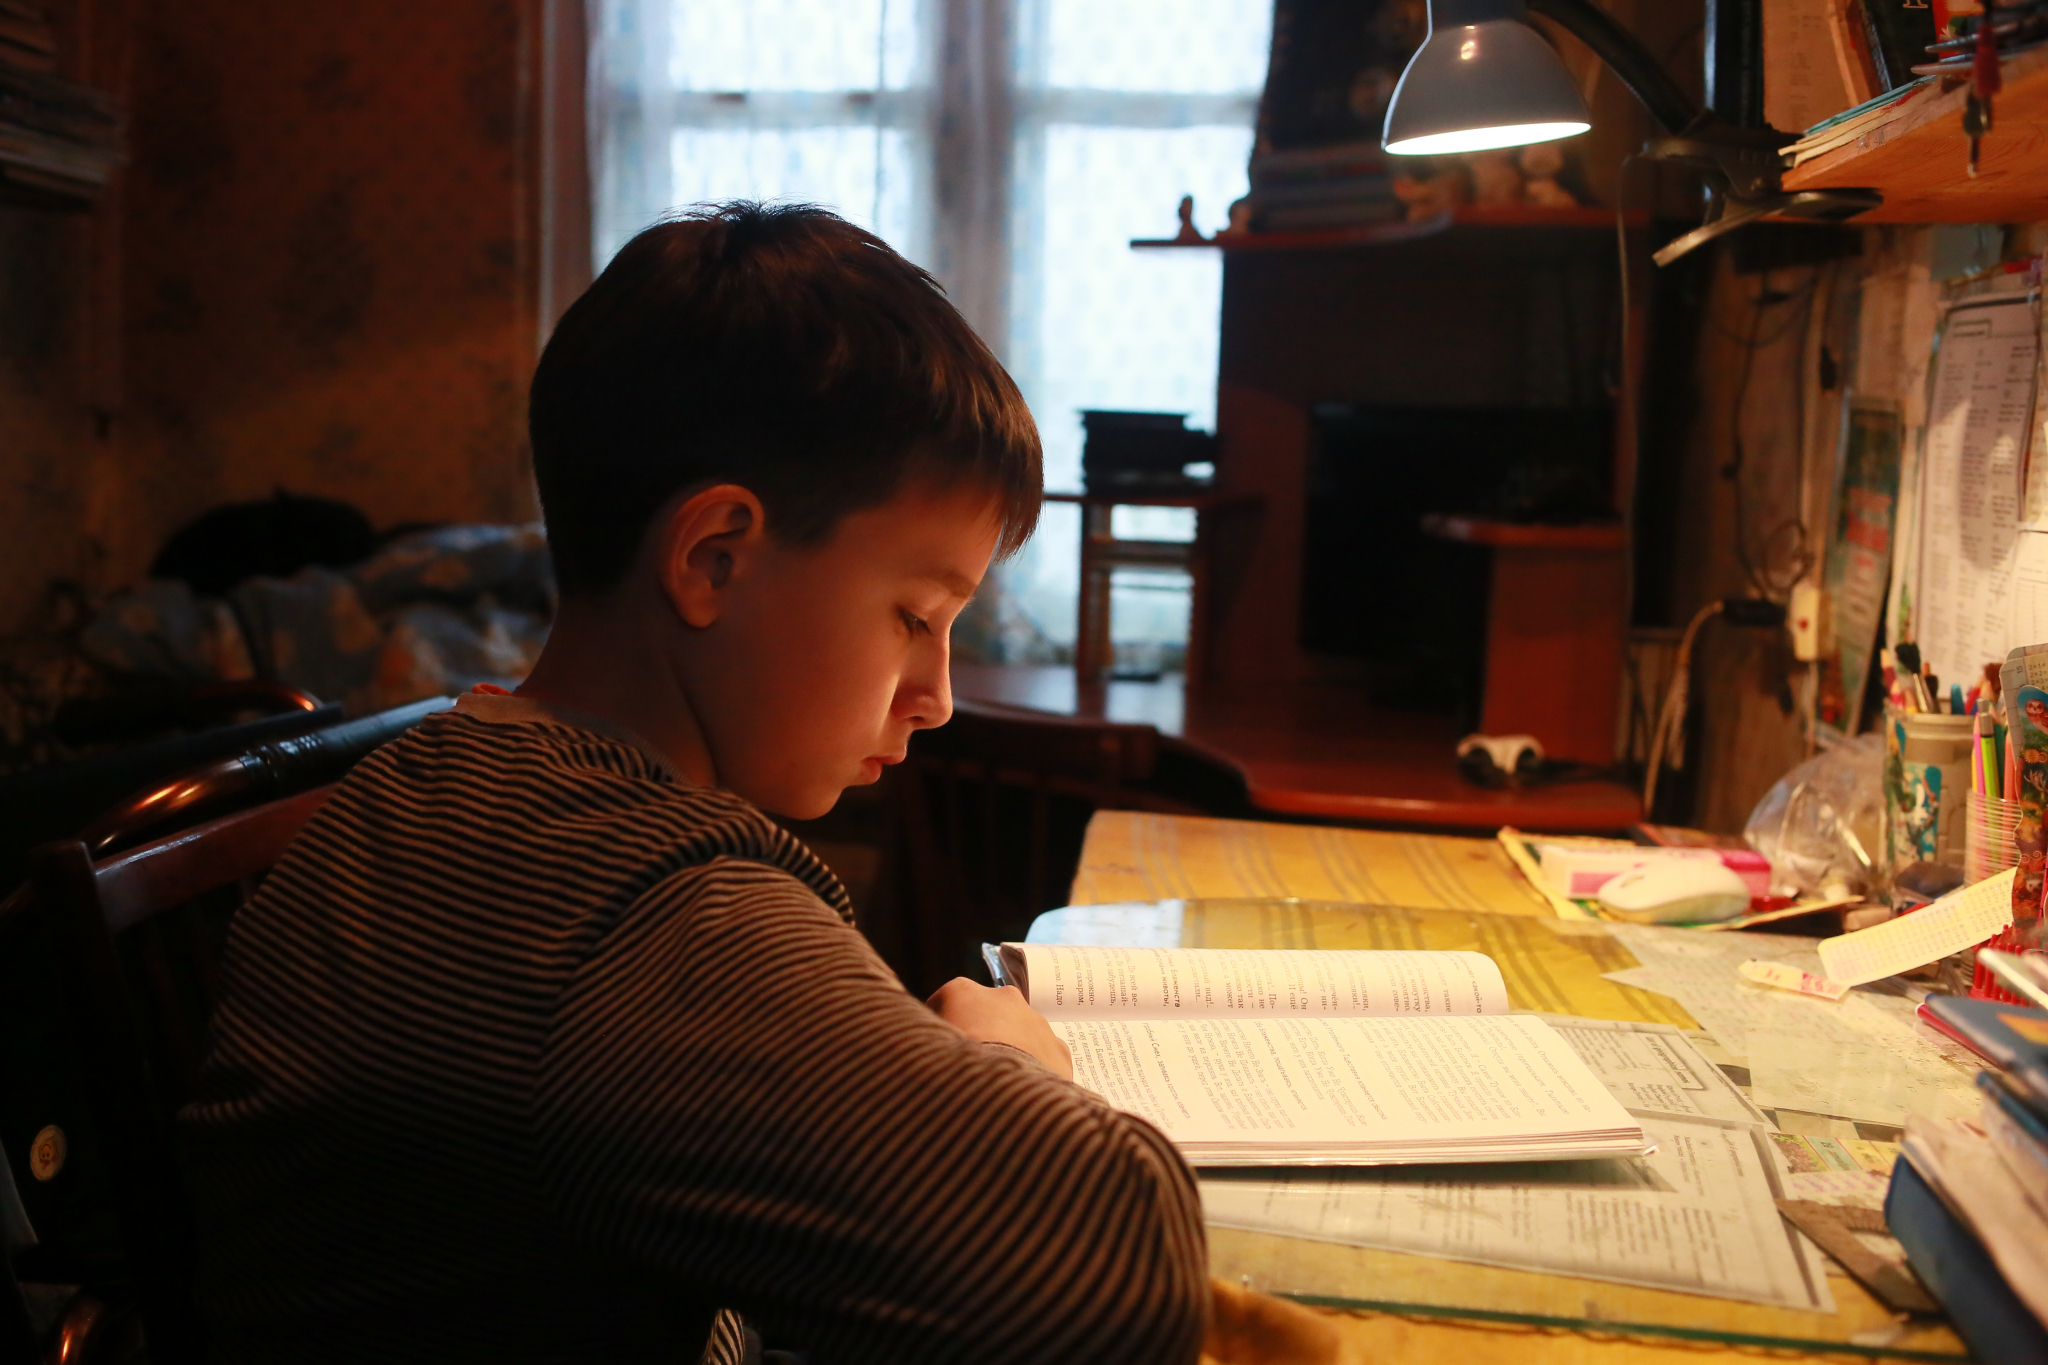 Без справки - нельзя: в Казани отказались пускать ребенка на уроки из-за отсутствия манту